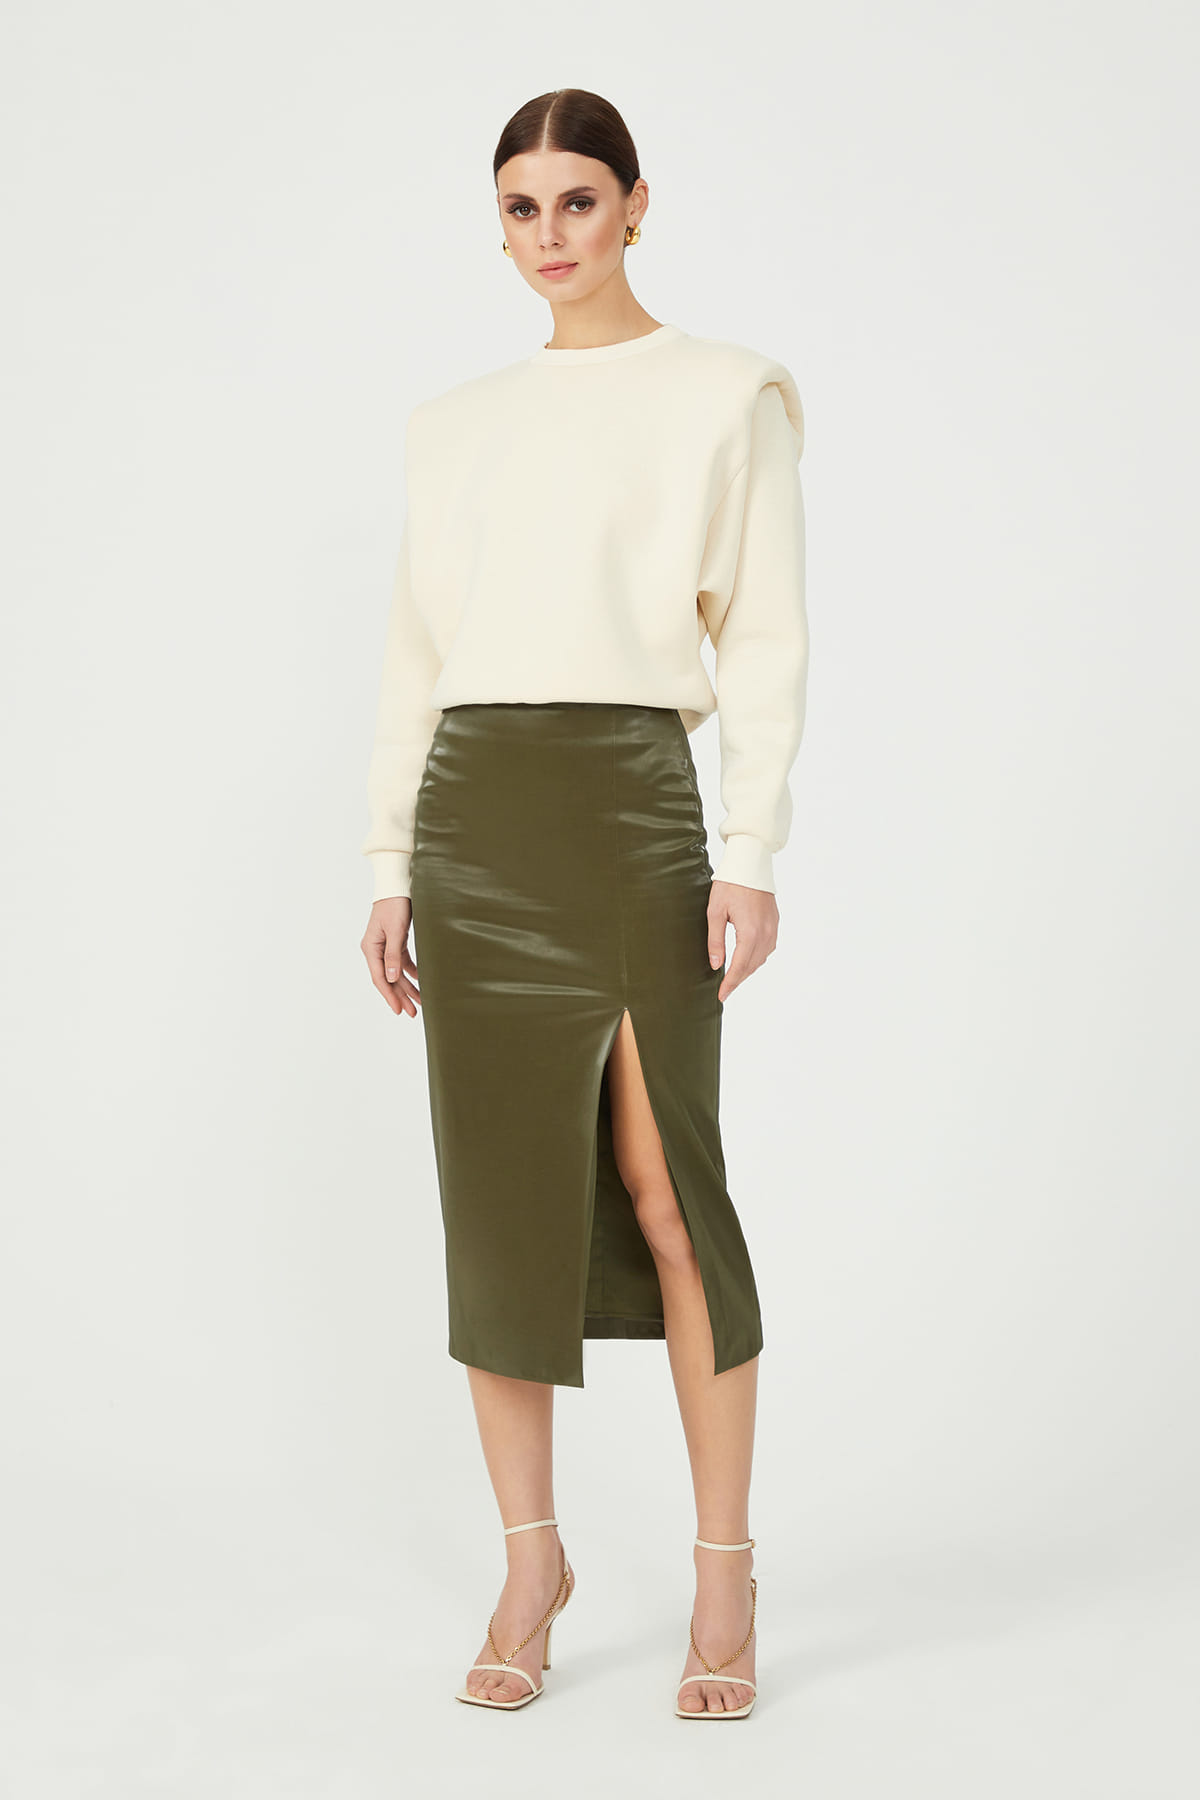 NICKIE Slit Detailed Khaki Midi Leather Skirt